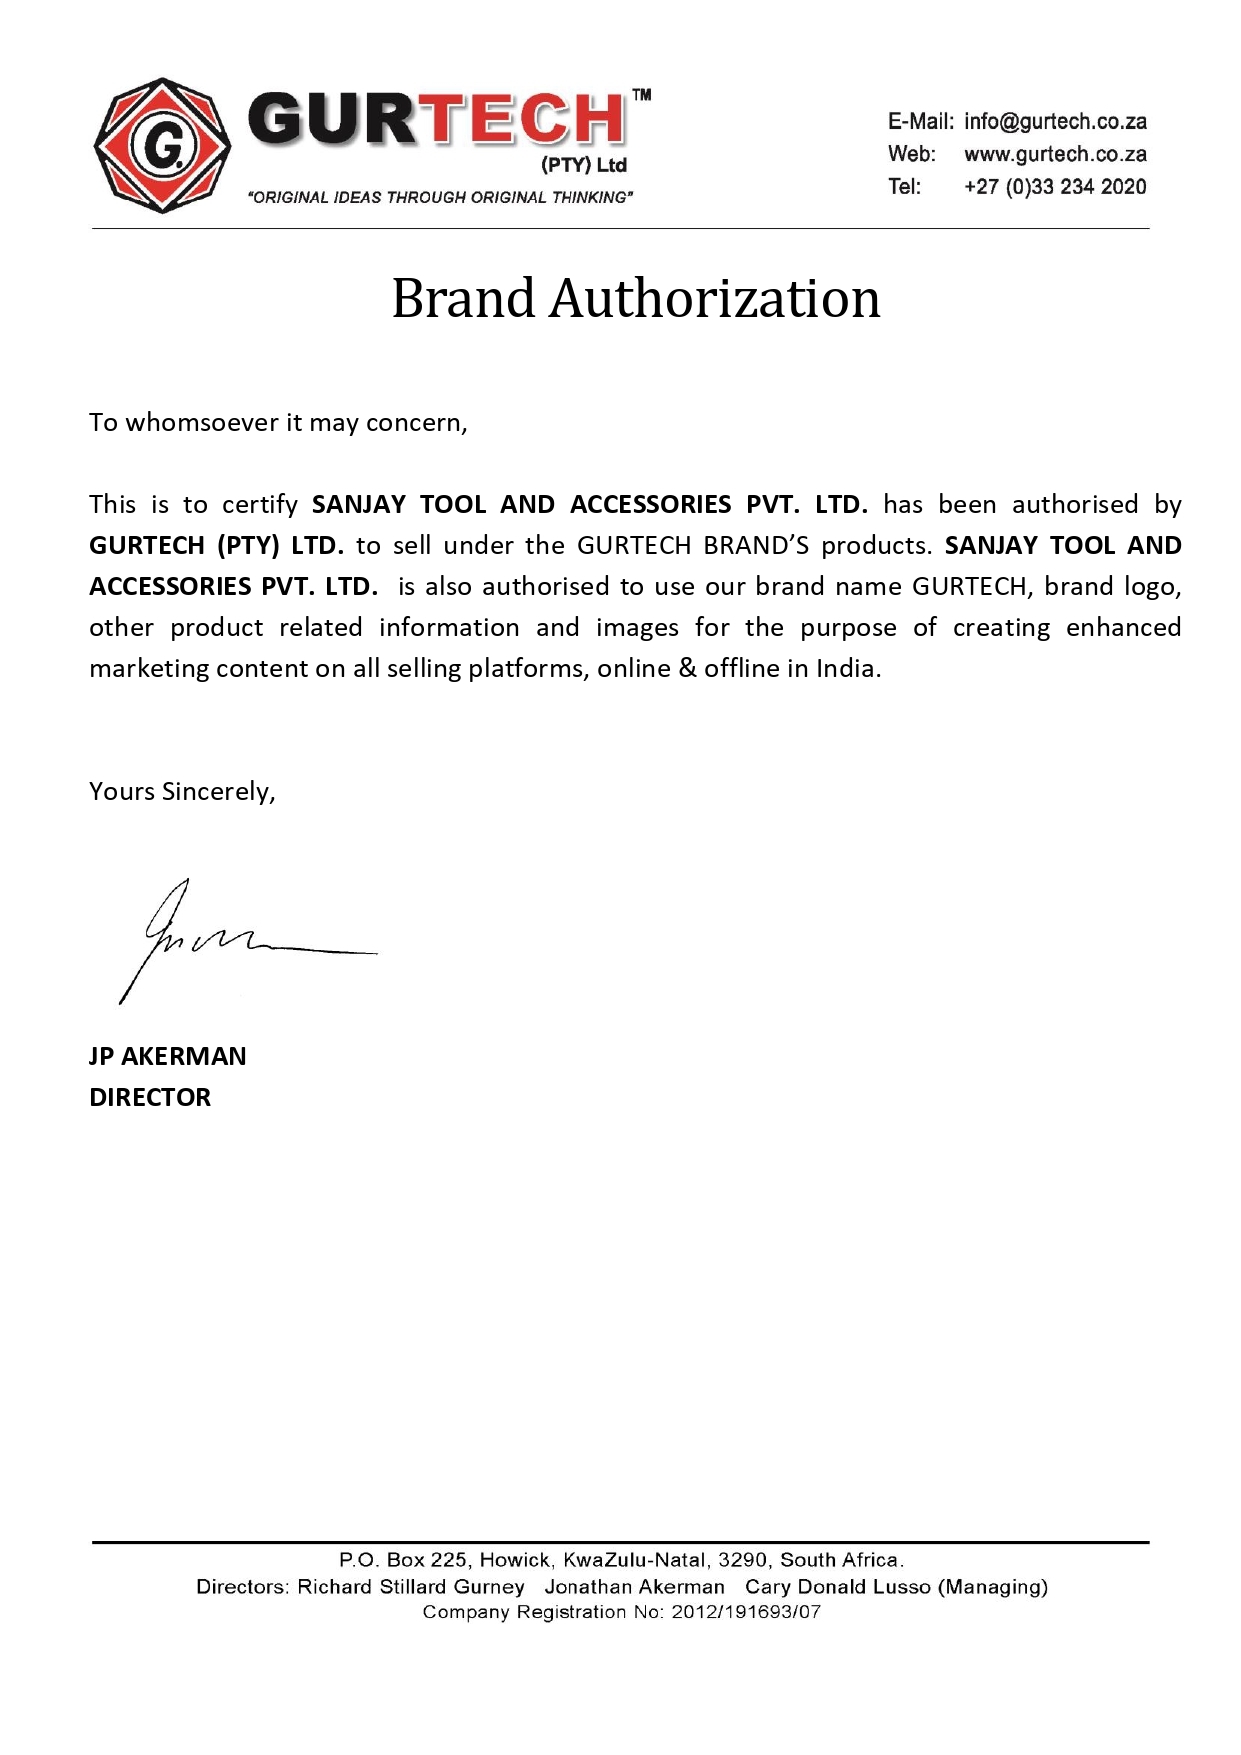 Gurtech Brand Authorization Letter